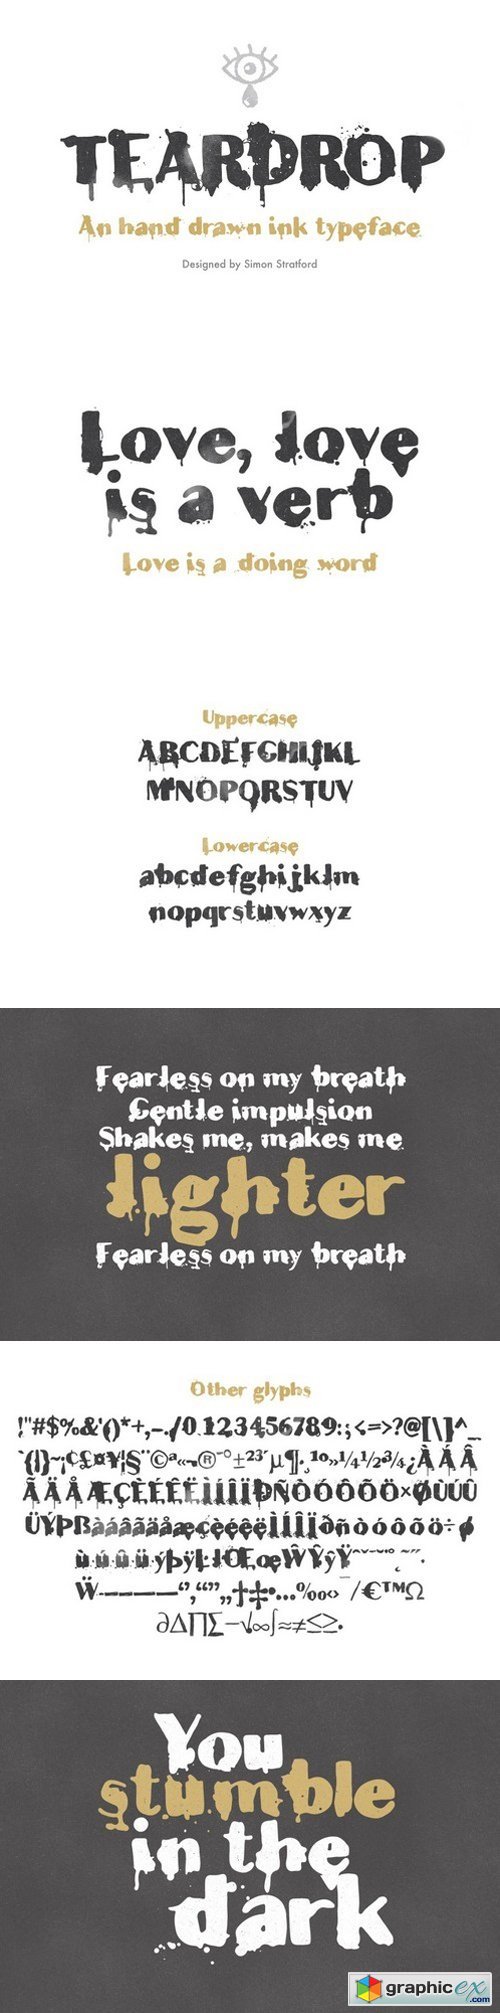 Teardrop typeface